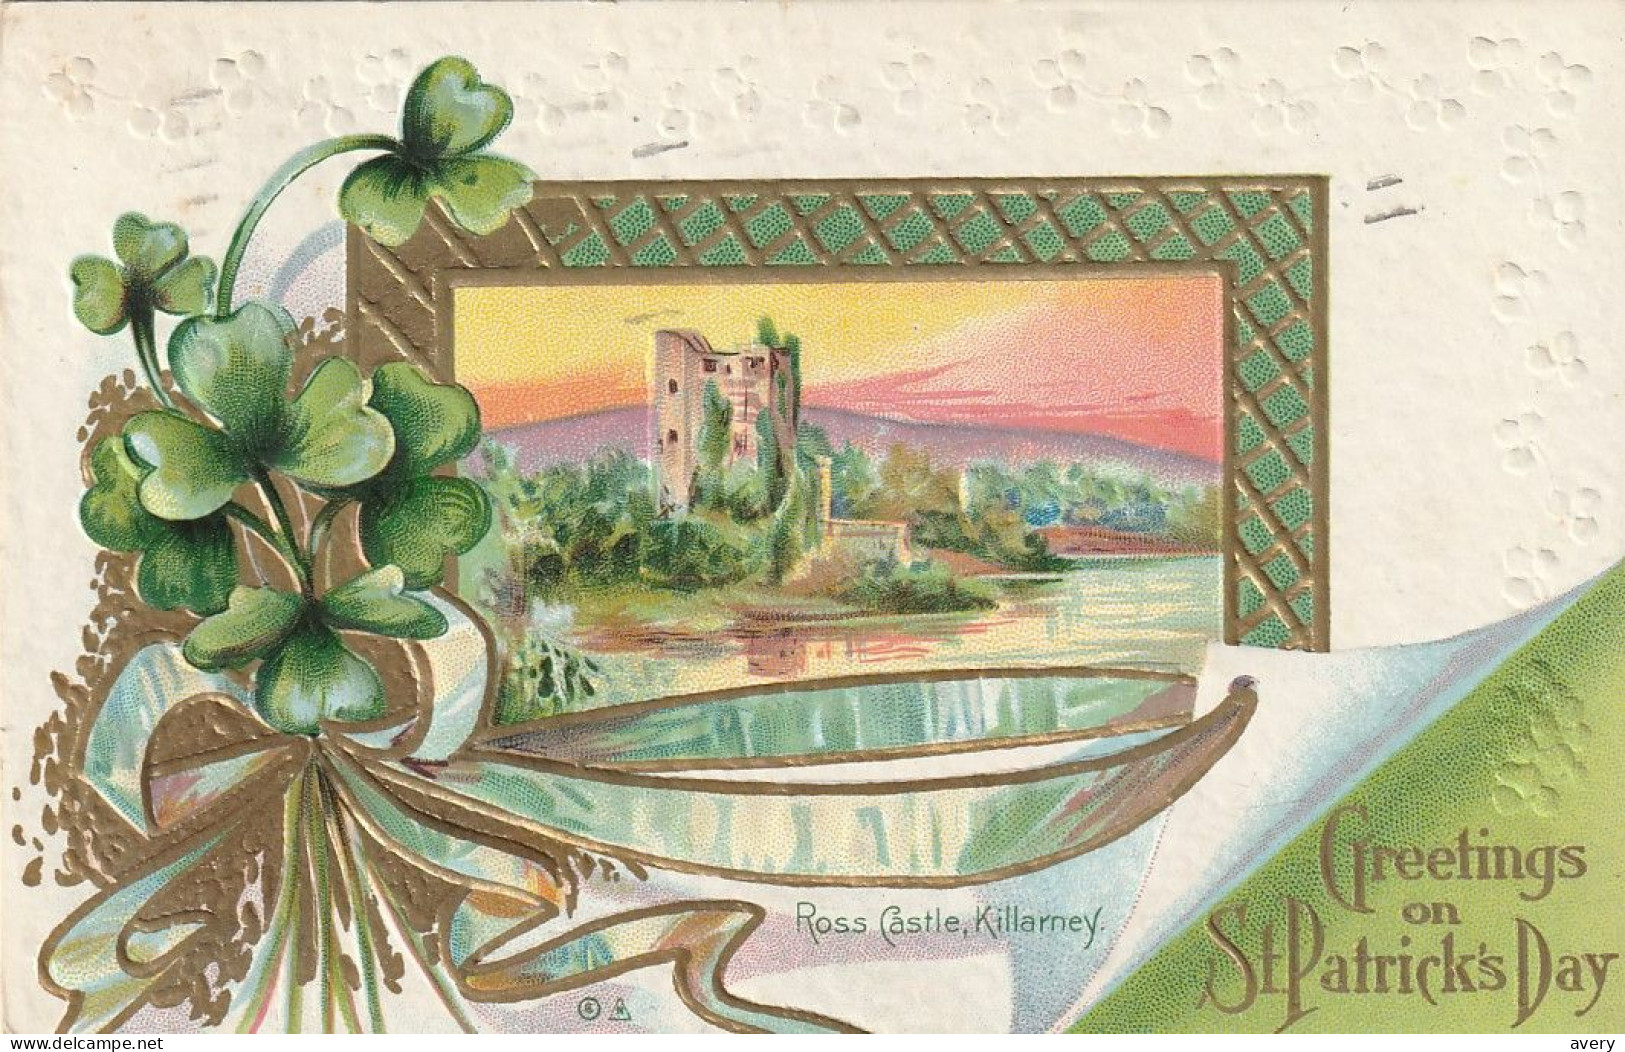 Greetings On St. Patrick's Day  Ross Castle, Killarney  .  .  .  . - Saint-Patrick